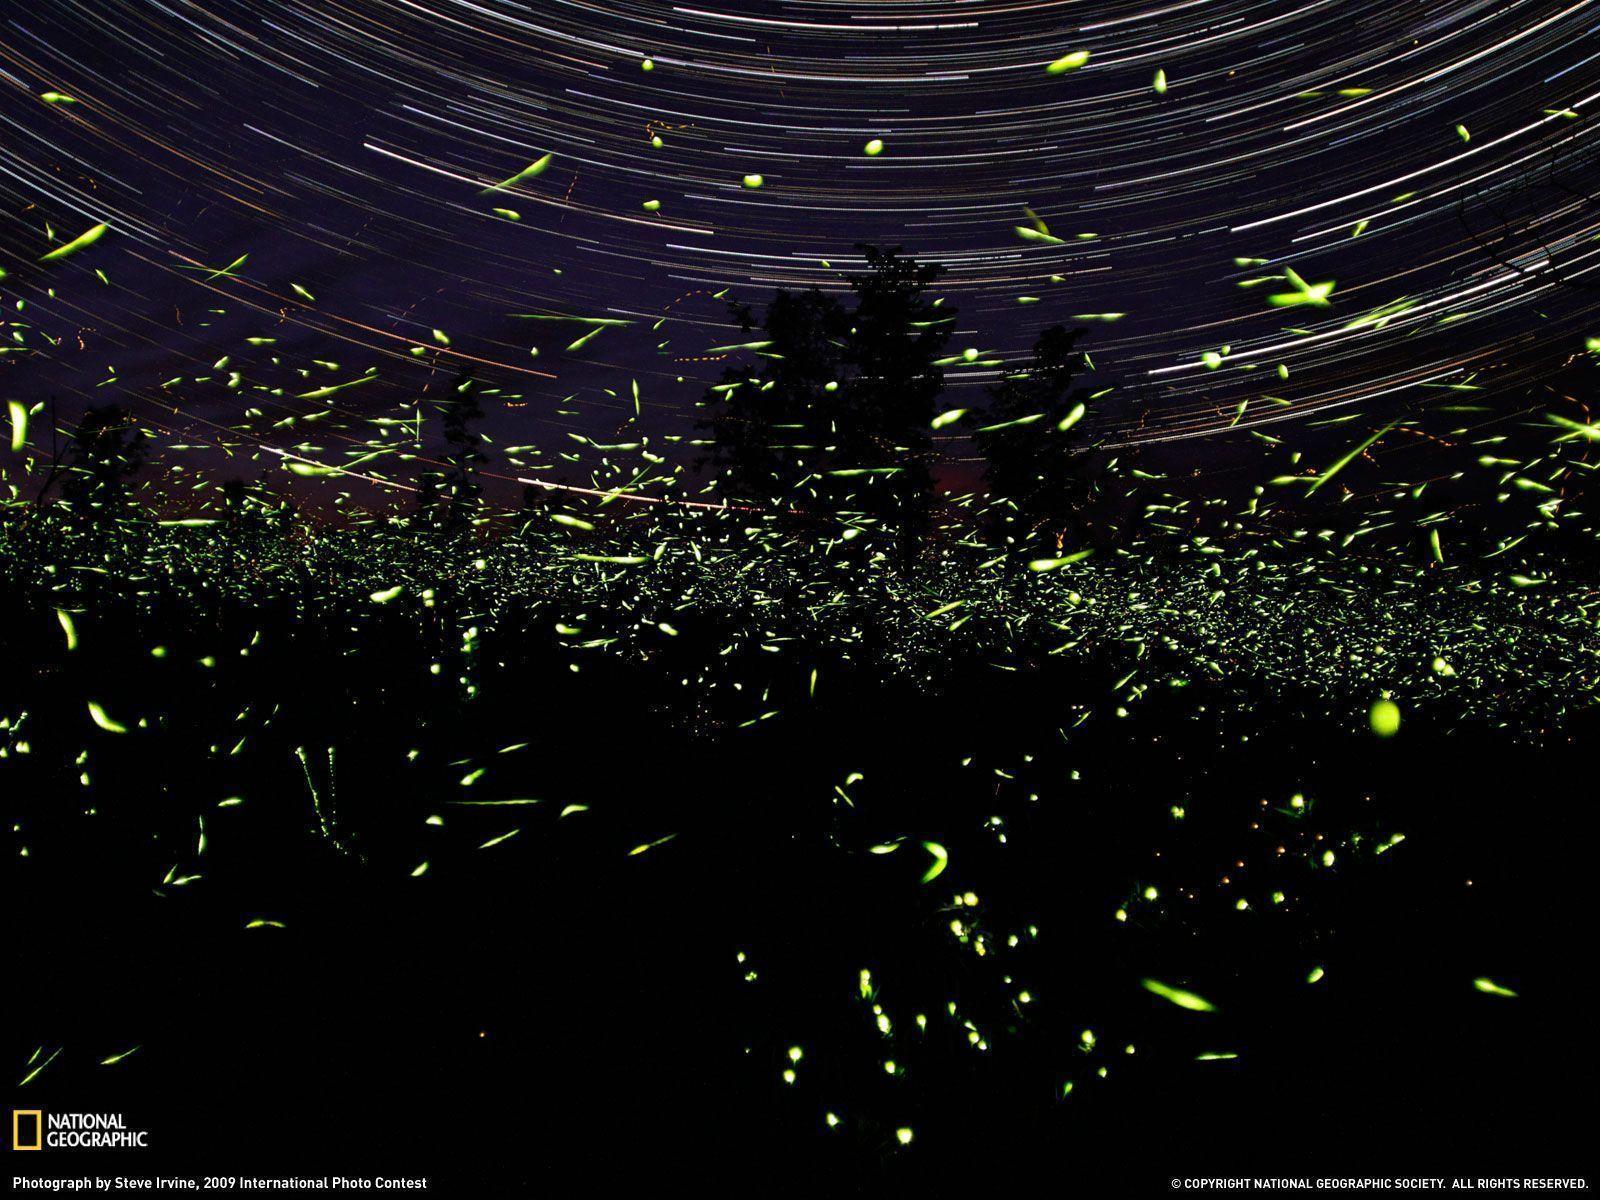 Fireflies Owl City Chords Album Dancing